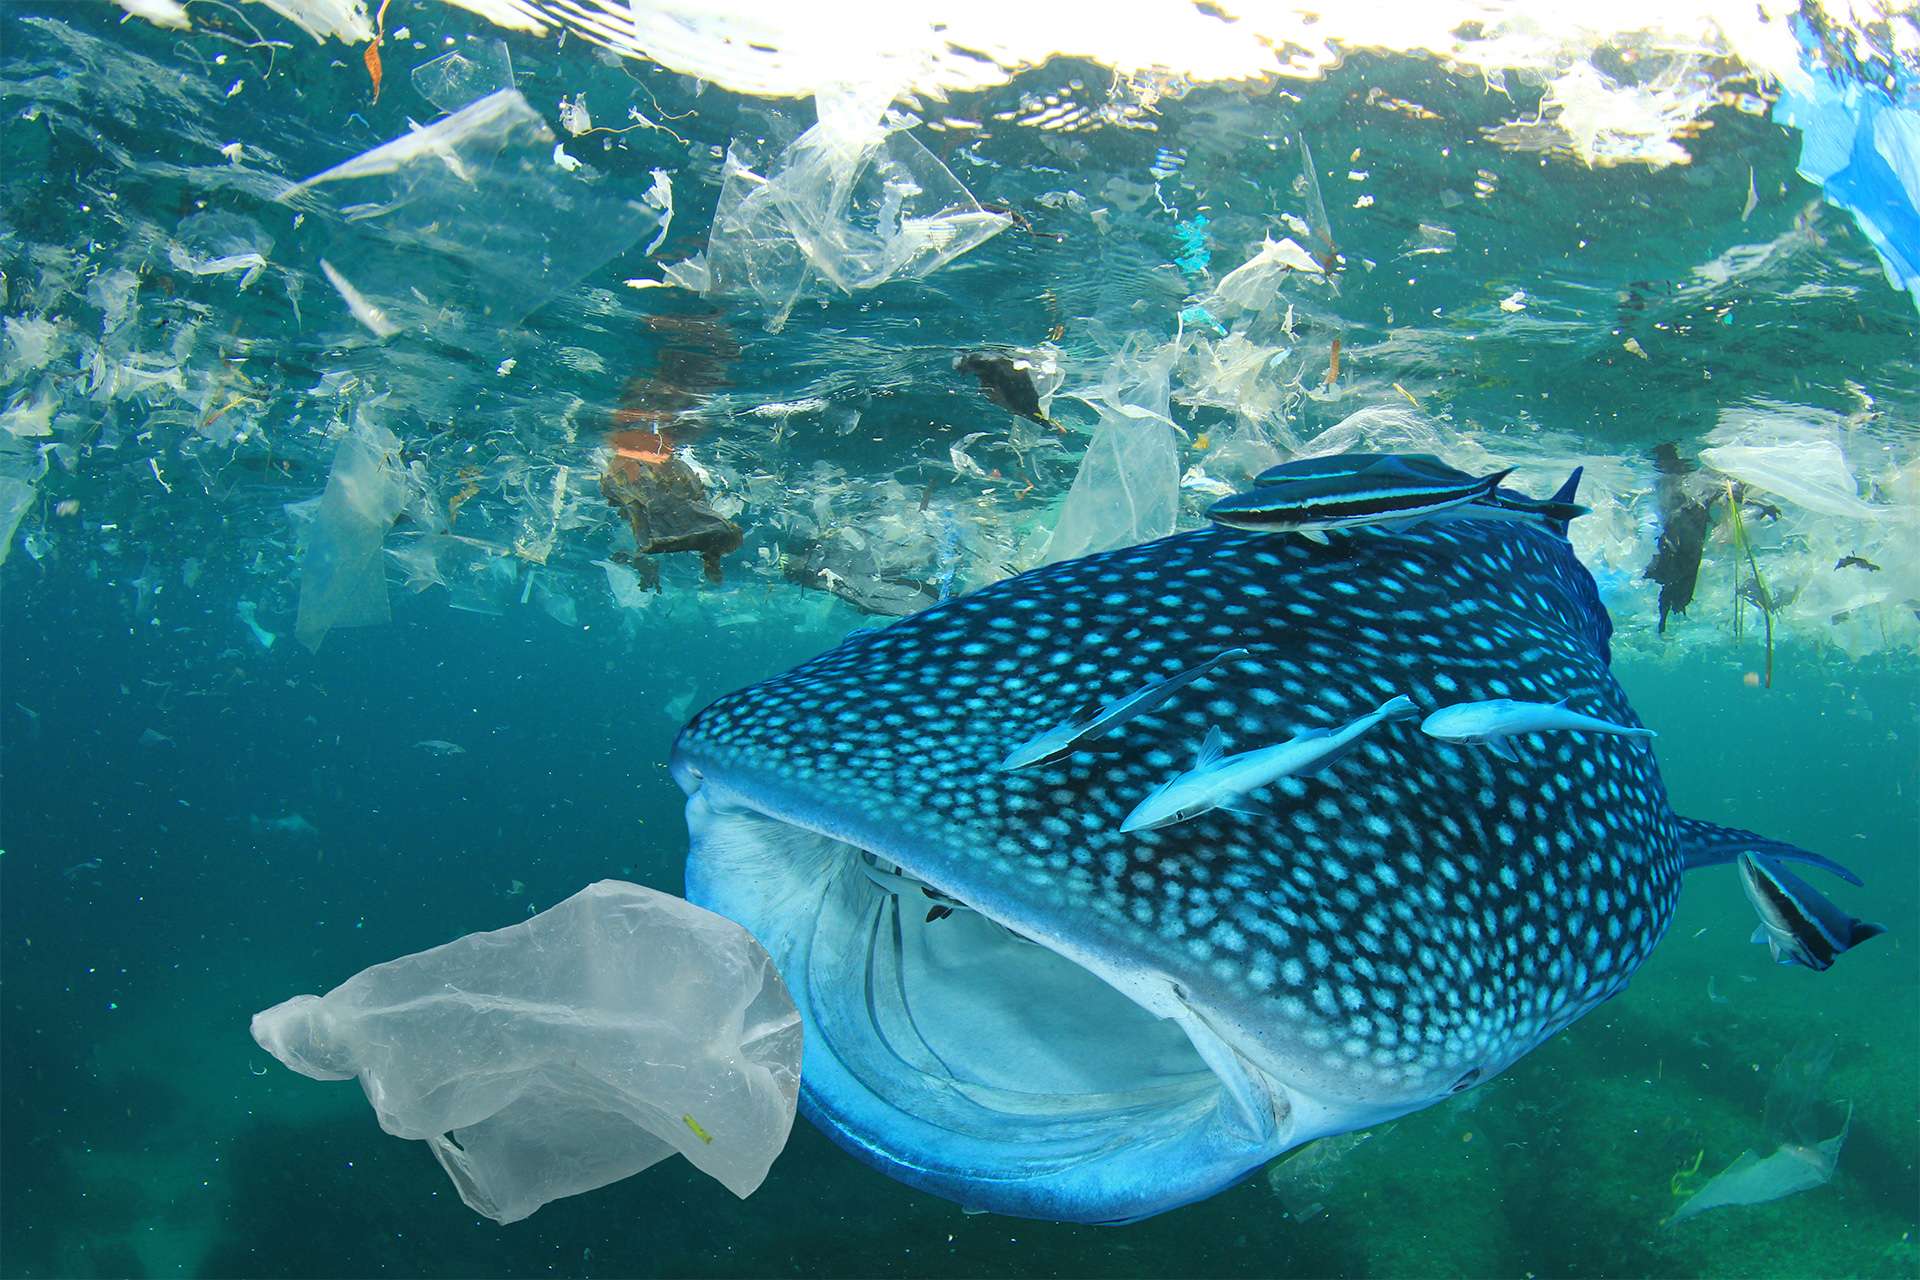 Plastic ocean pollution Whale Shark filter feeds in polluted ocean ingesting plastic TeamJiX